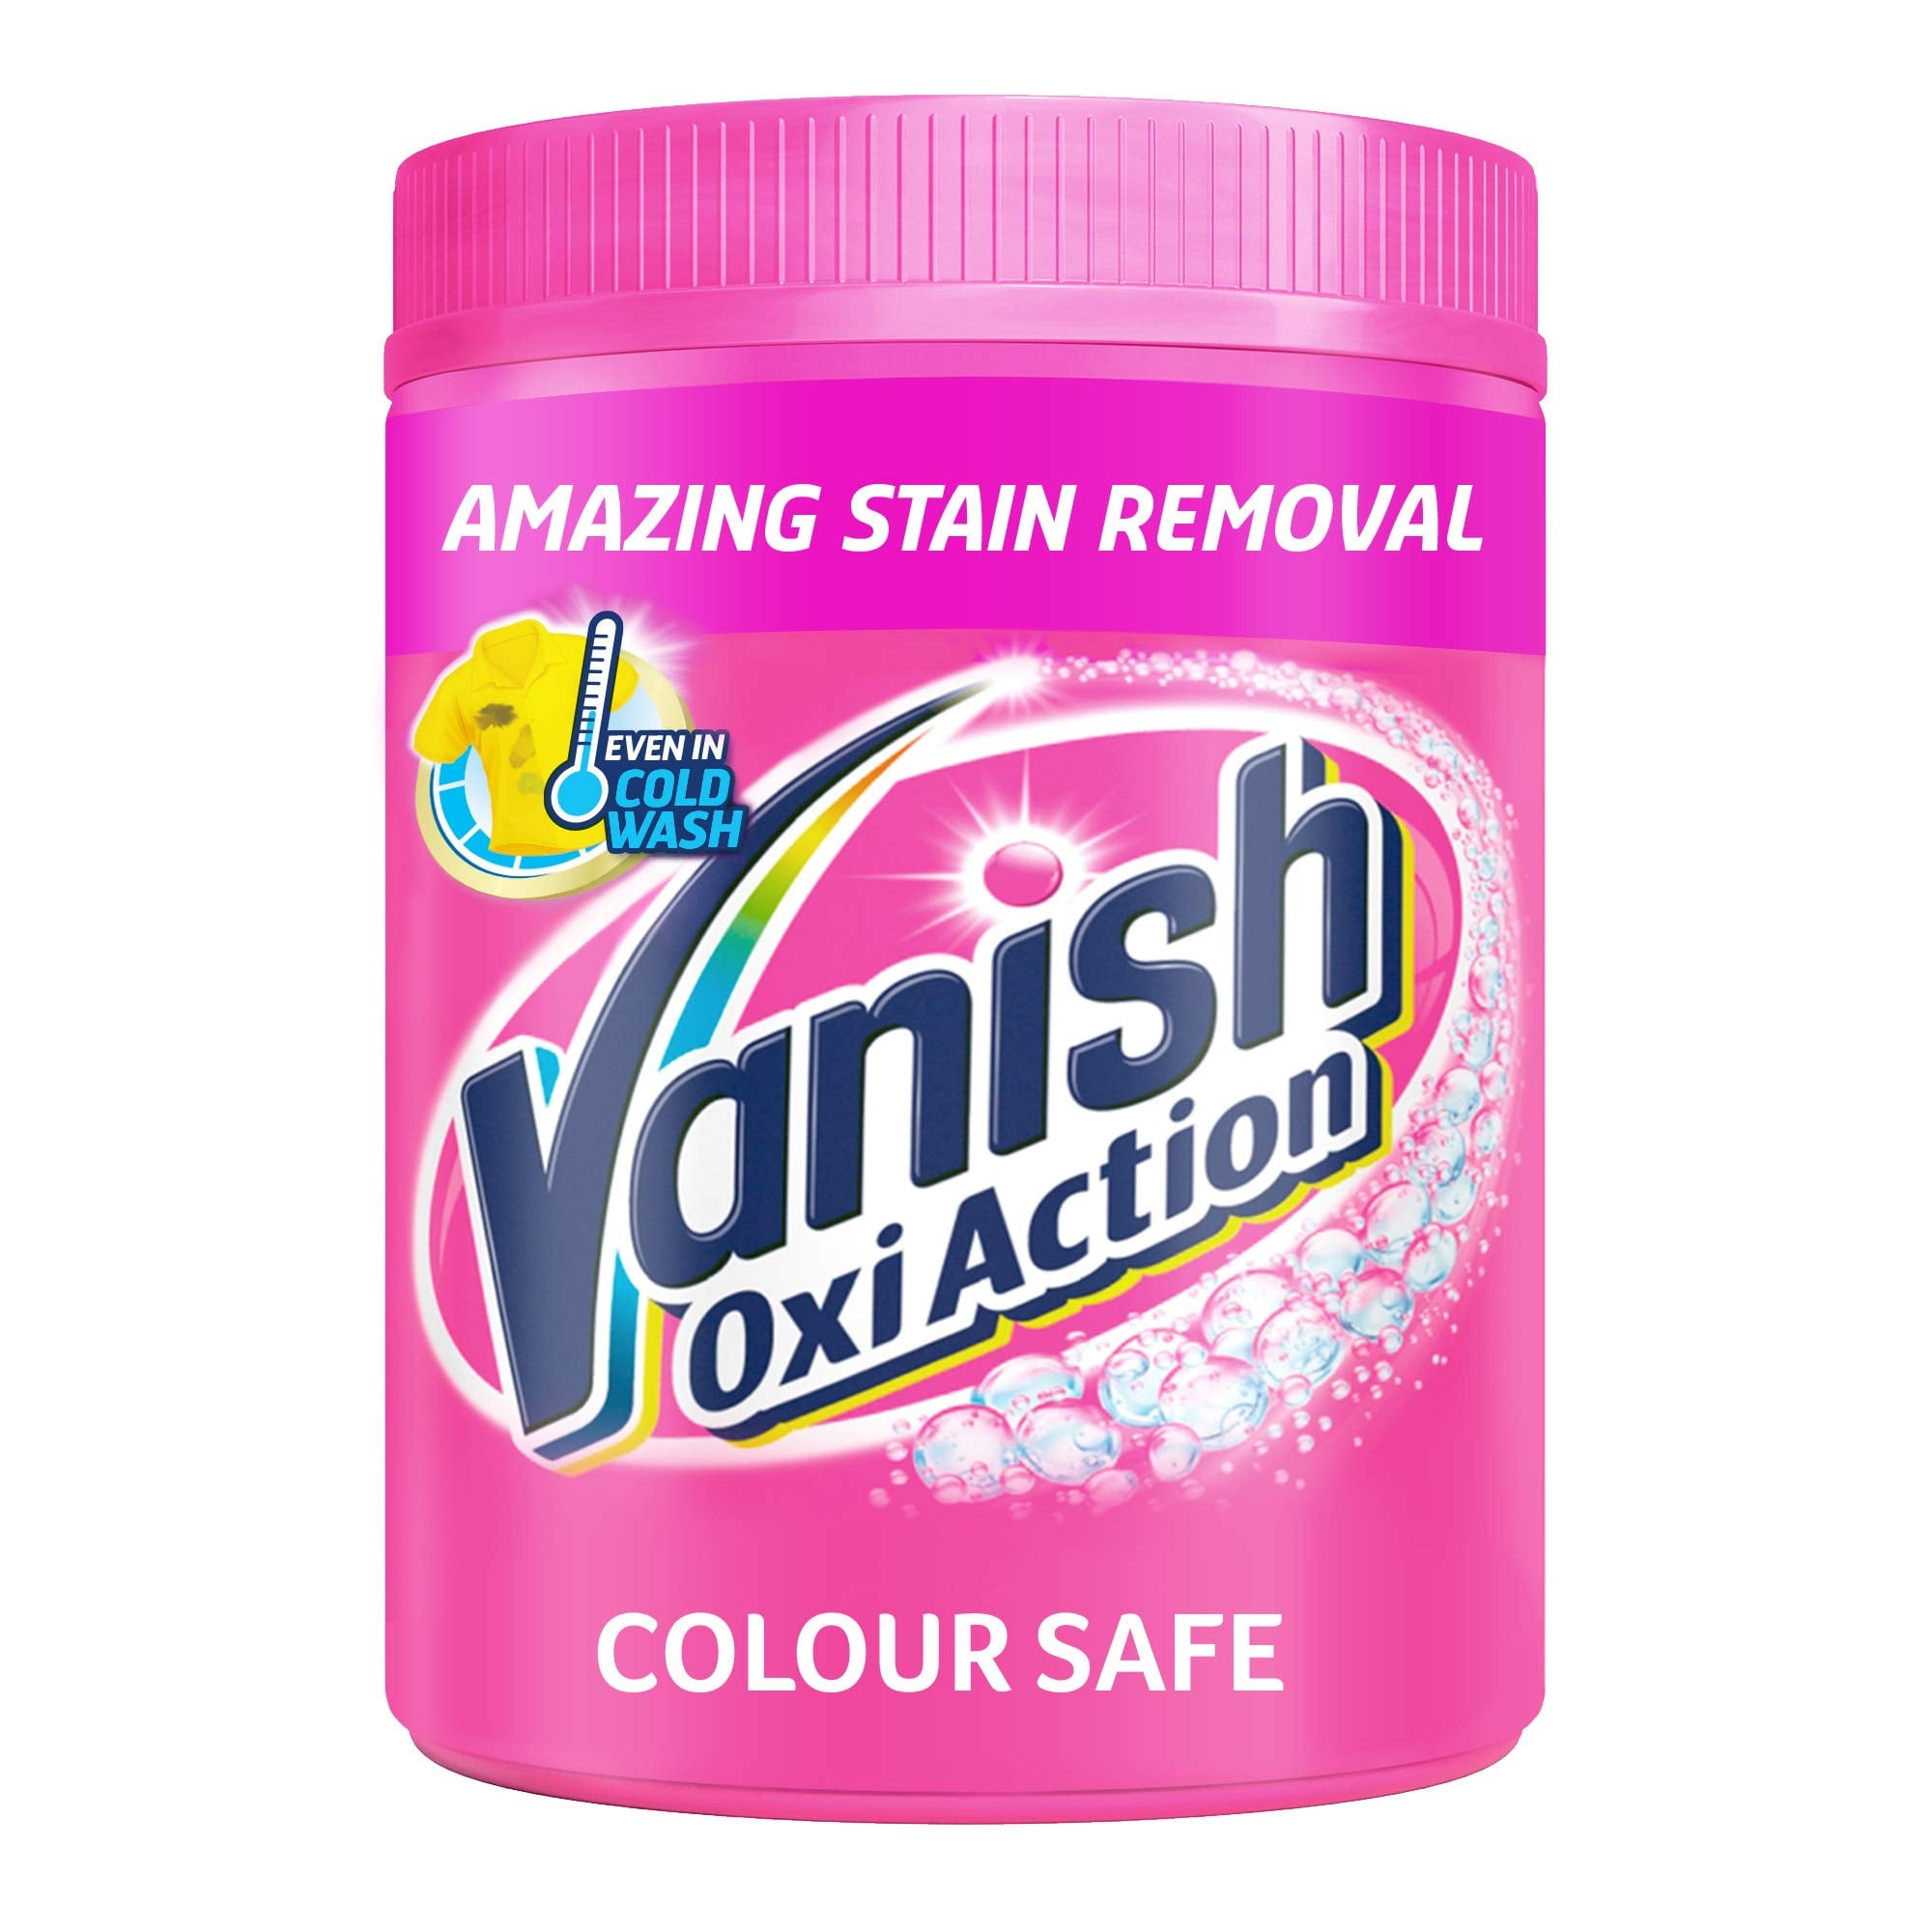 Vanish Oxi Action Powder White 1kg (Pack of 2)